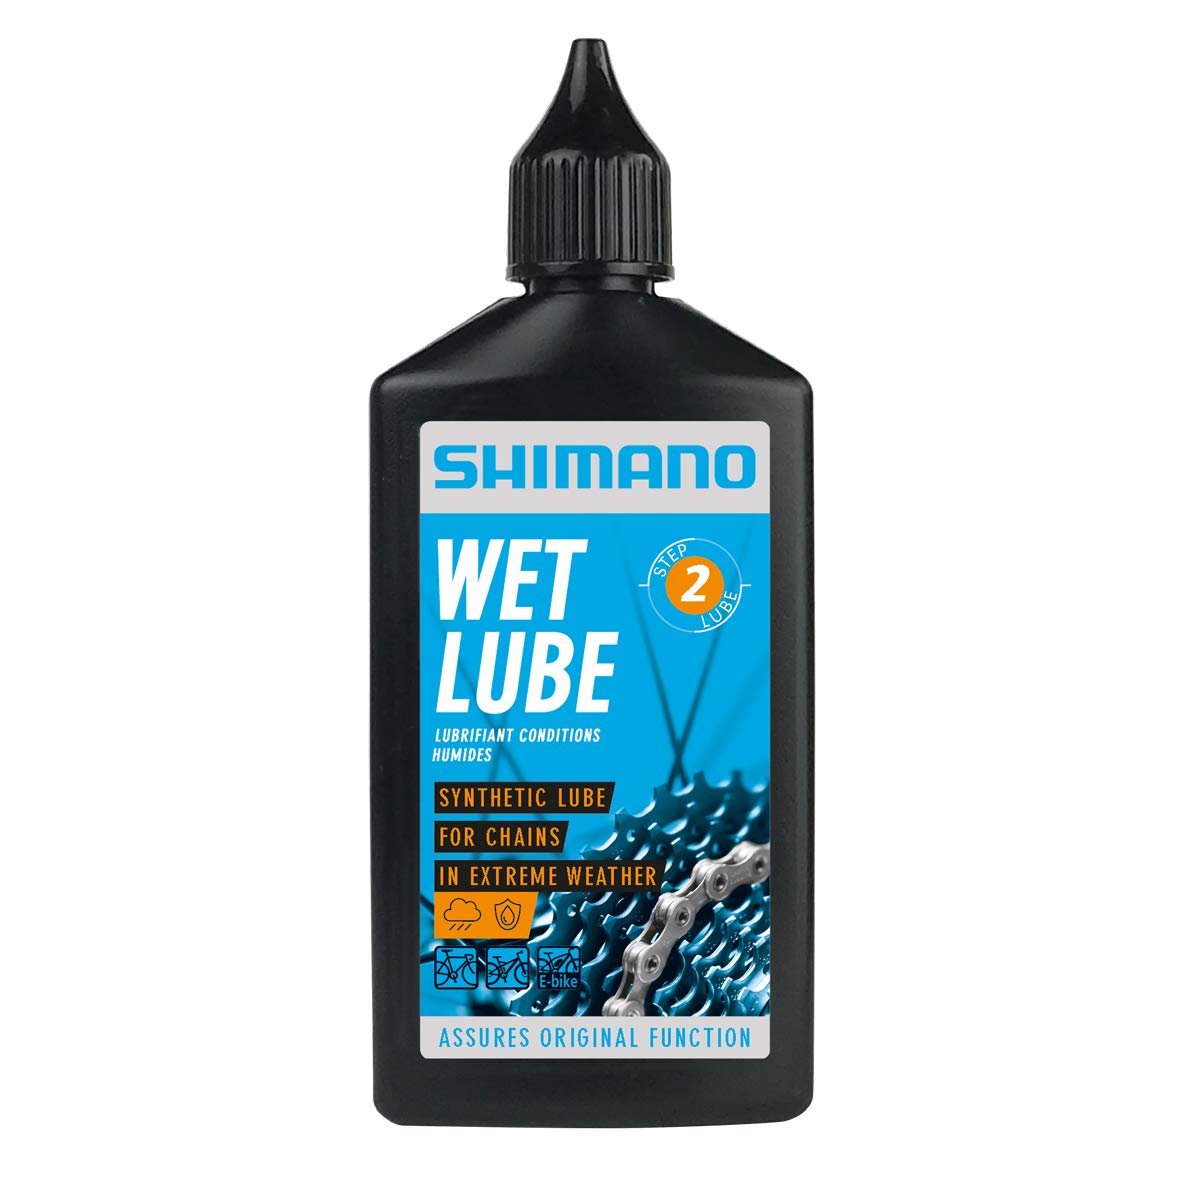 Смазка Shimano Wet Lube, для цепи, для влажной погоды, флакон, 100 мл, LBWL1B0100SA смазка muc off 2015 wet lube для цепи 1л 833